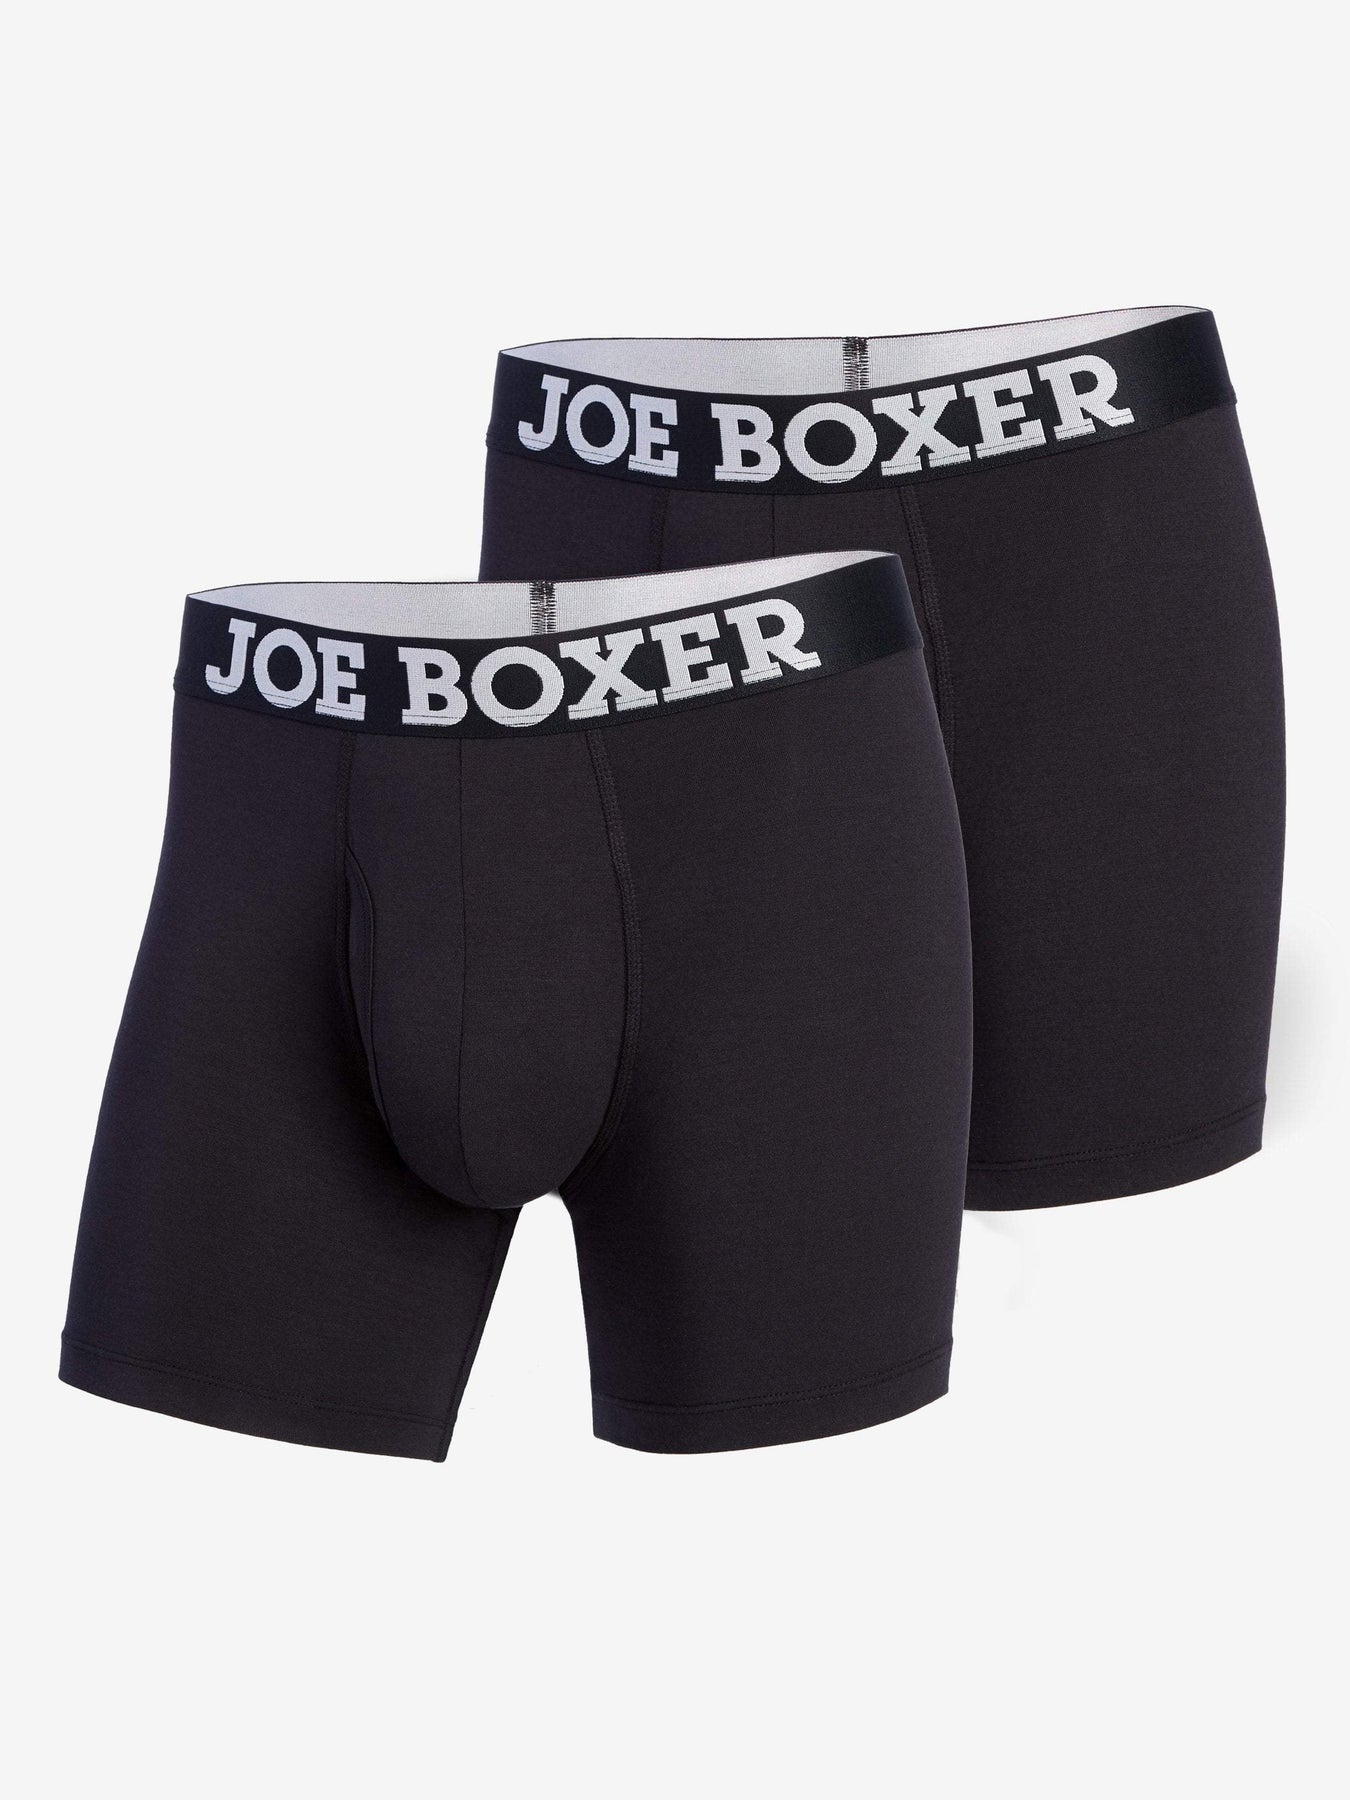 Joe Boxer Canada